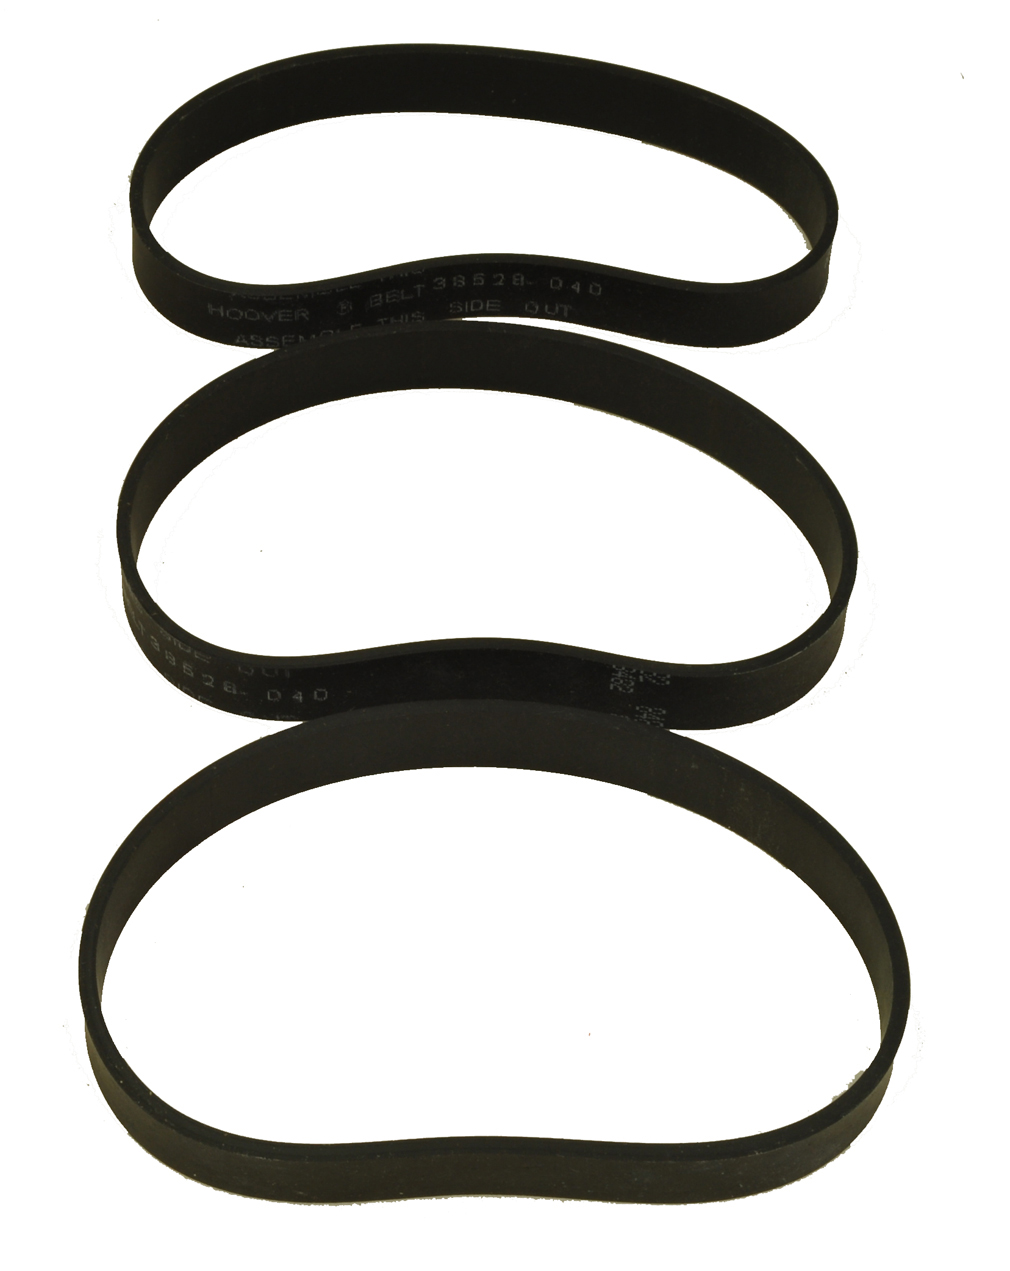 Hoover Fusion Vacuum Cleaner Belts Brushroll Belts, 3 / Pack